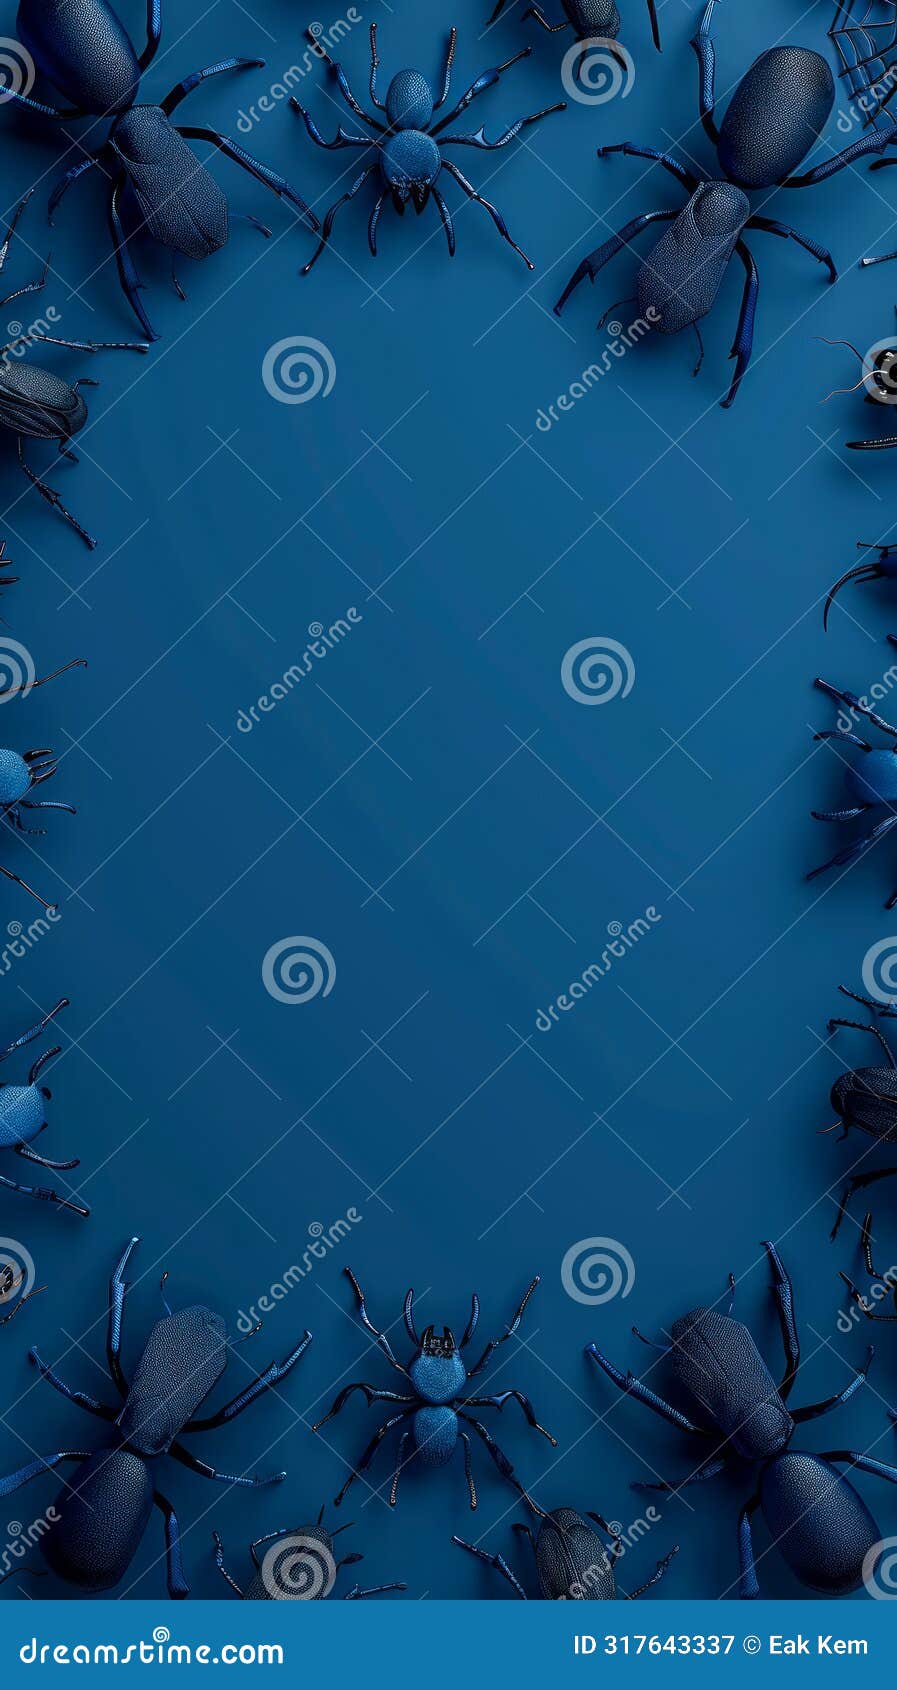 creepy crawly tarantulas surrounding a blank blue space ideal for halloween themes